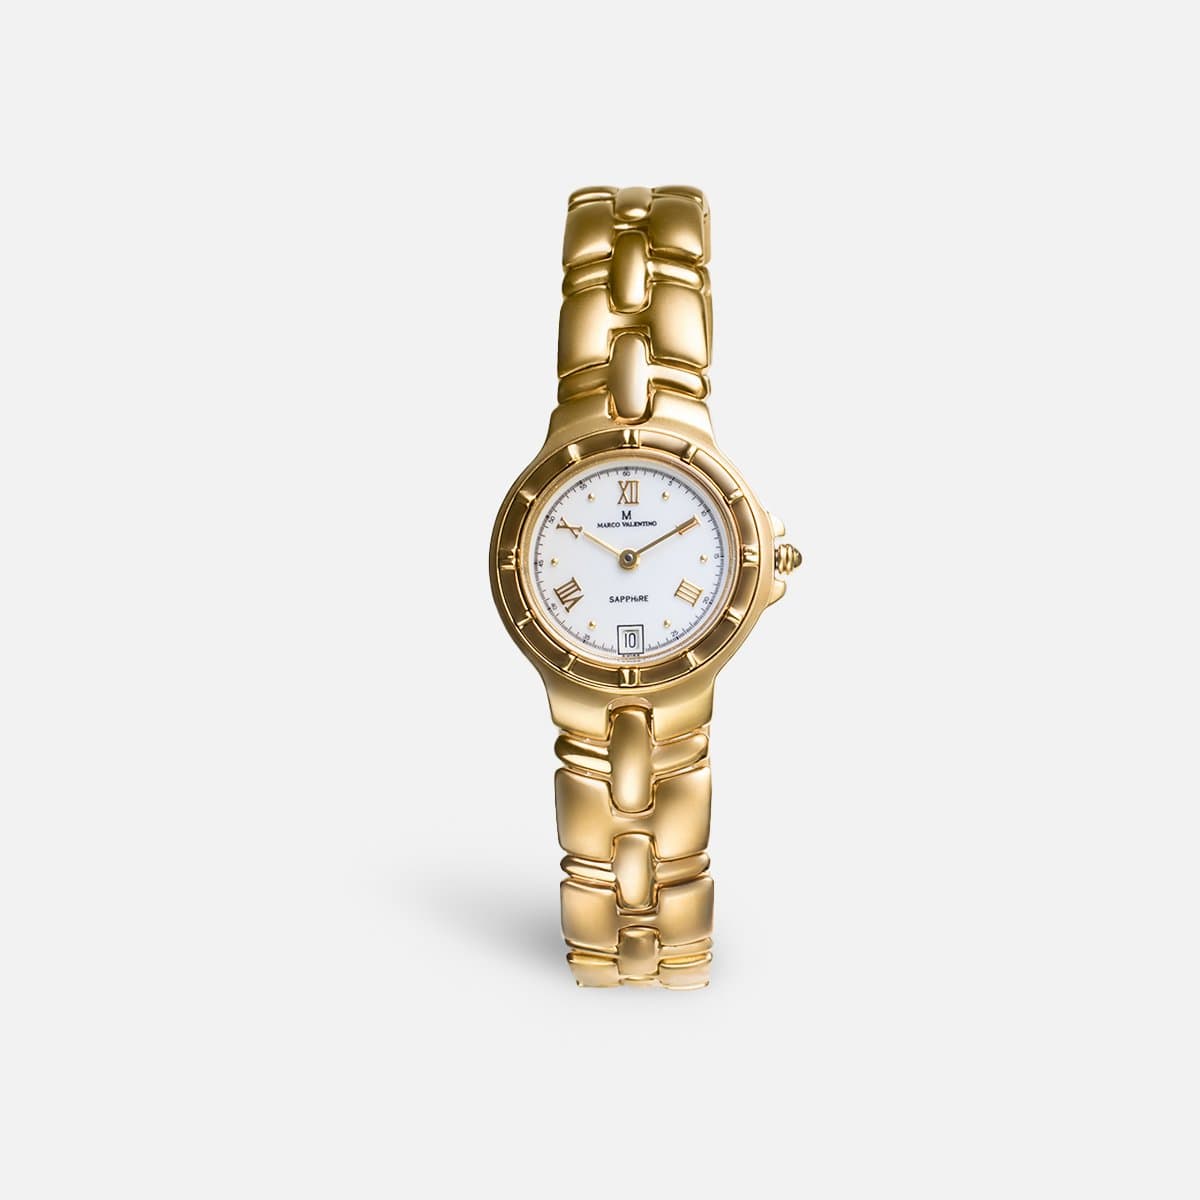 Wrist Watches – Women's Watch by Marco KW | Klinq